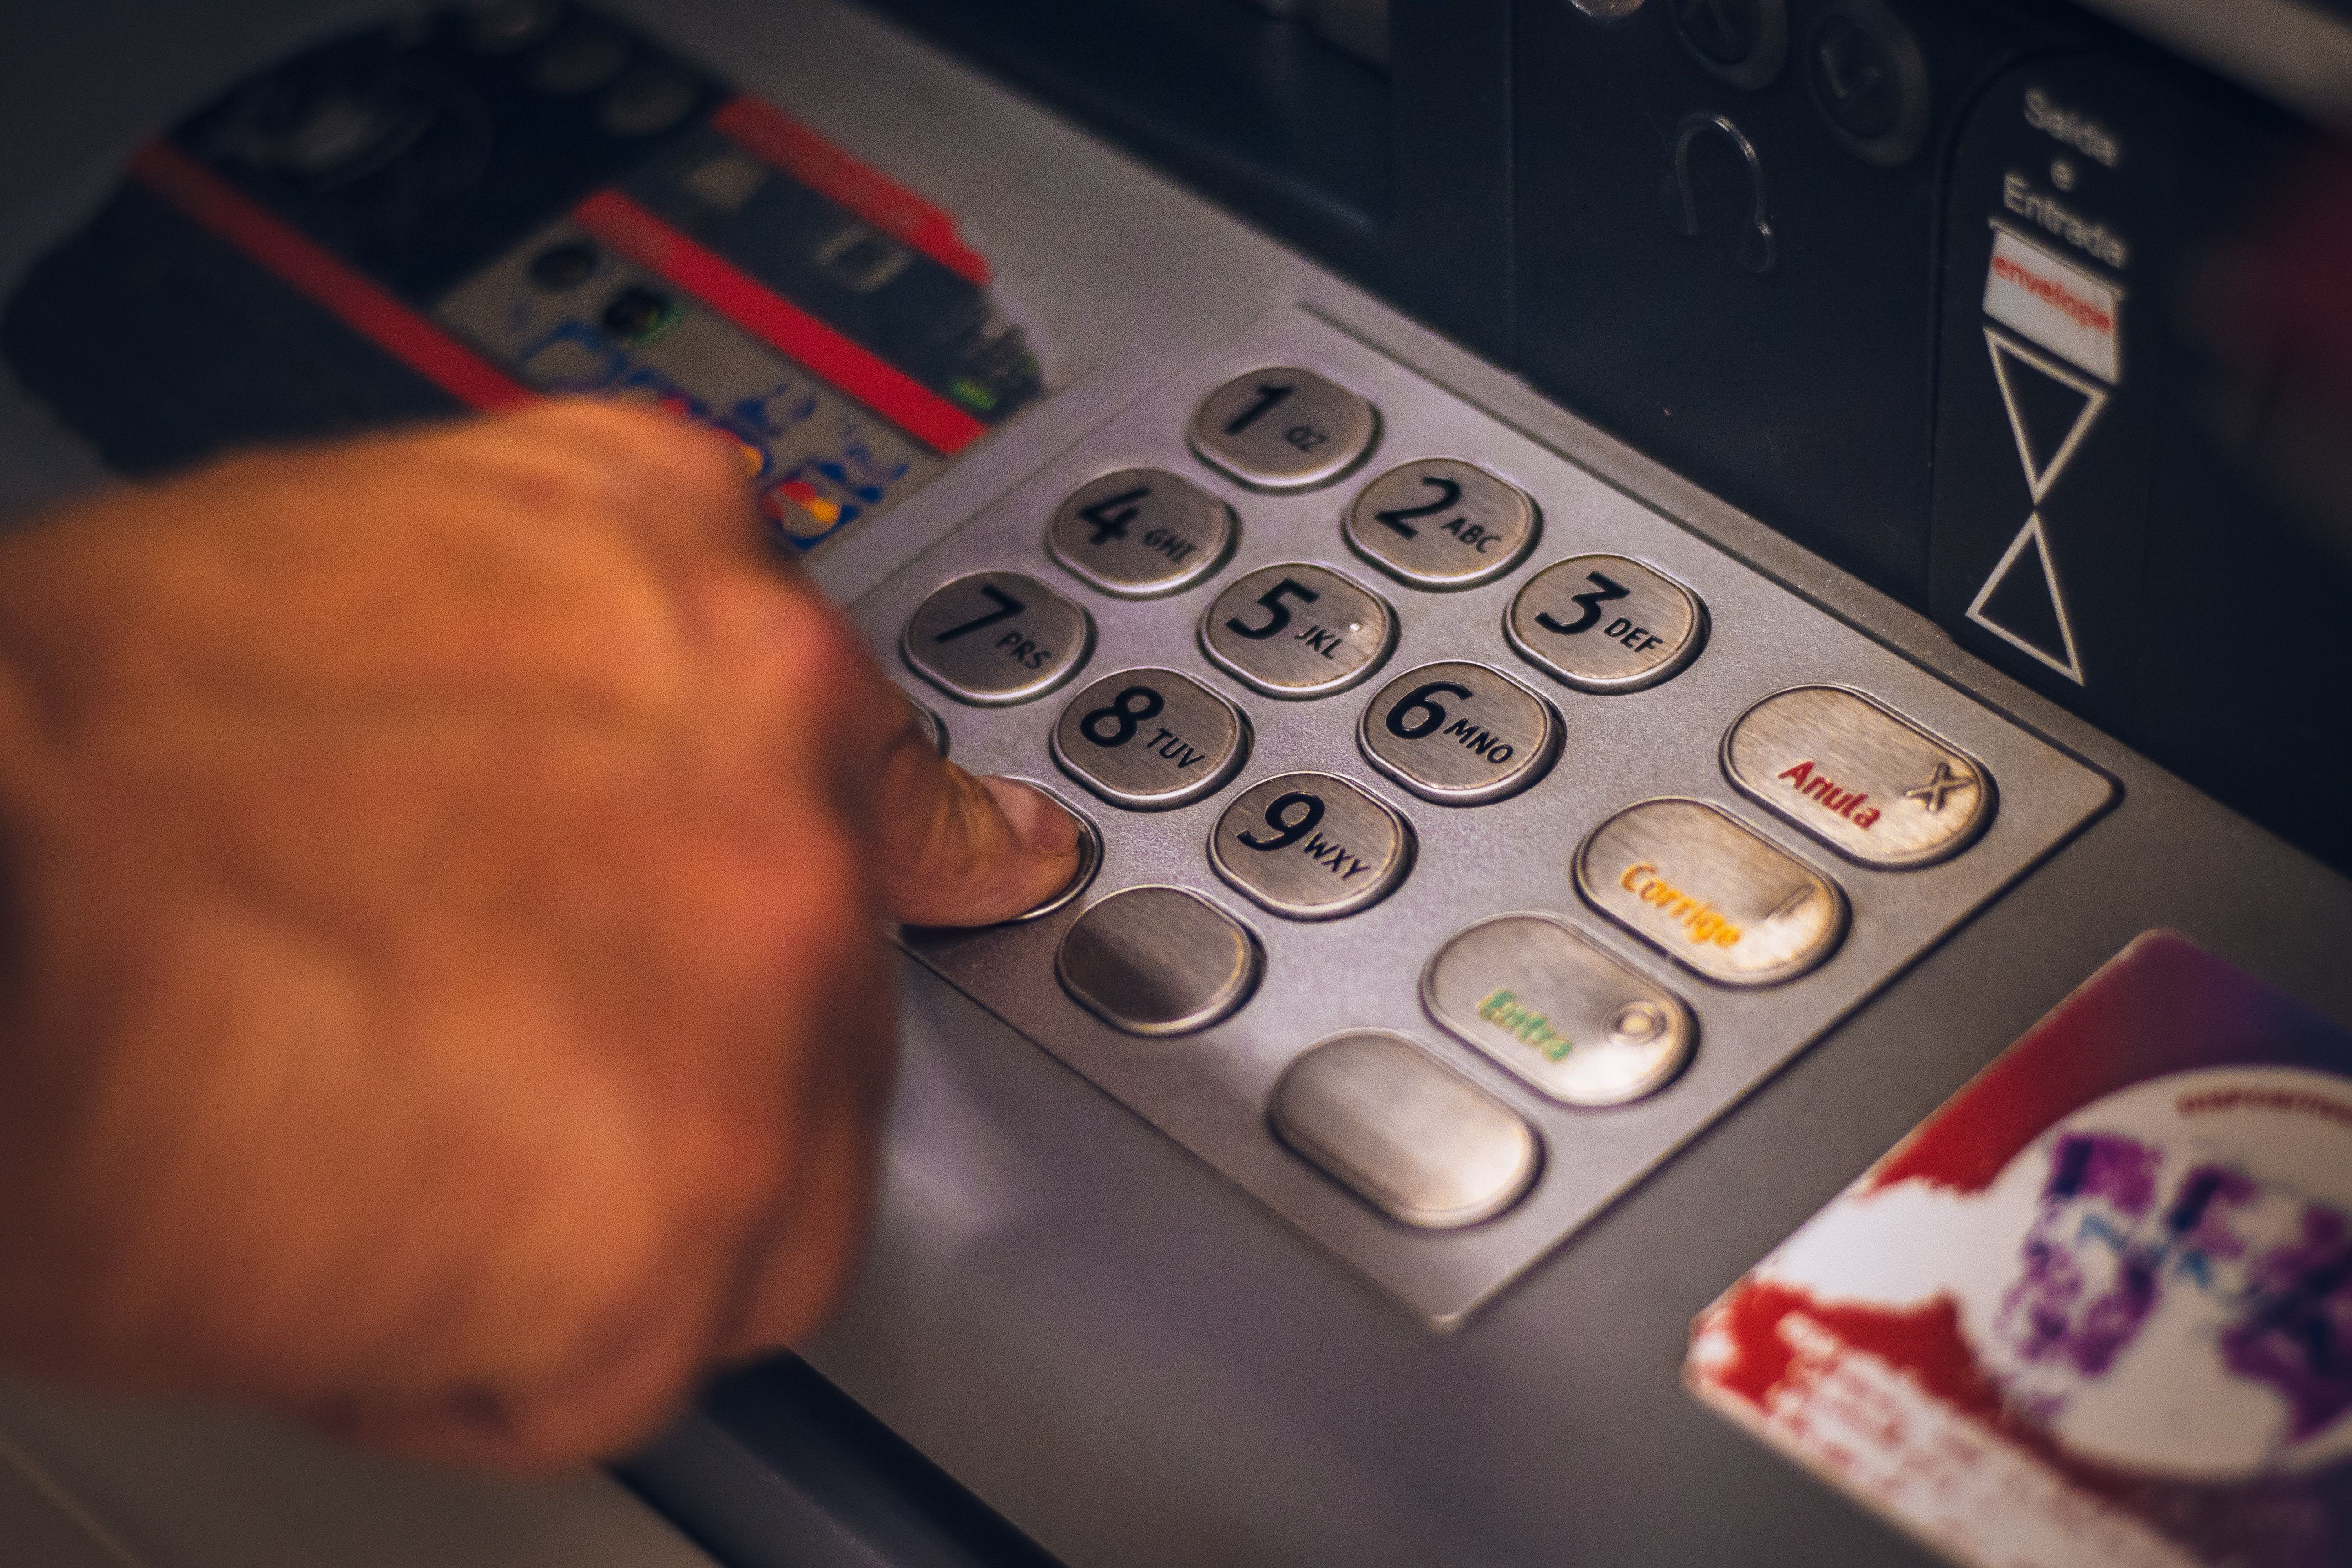 Шахрайство в банкоматах – українець поповнив картку на 90 тисяч гривень